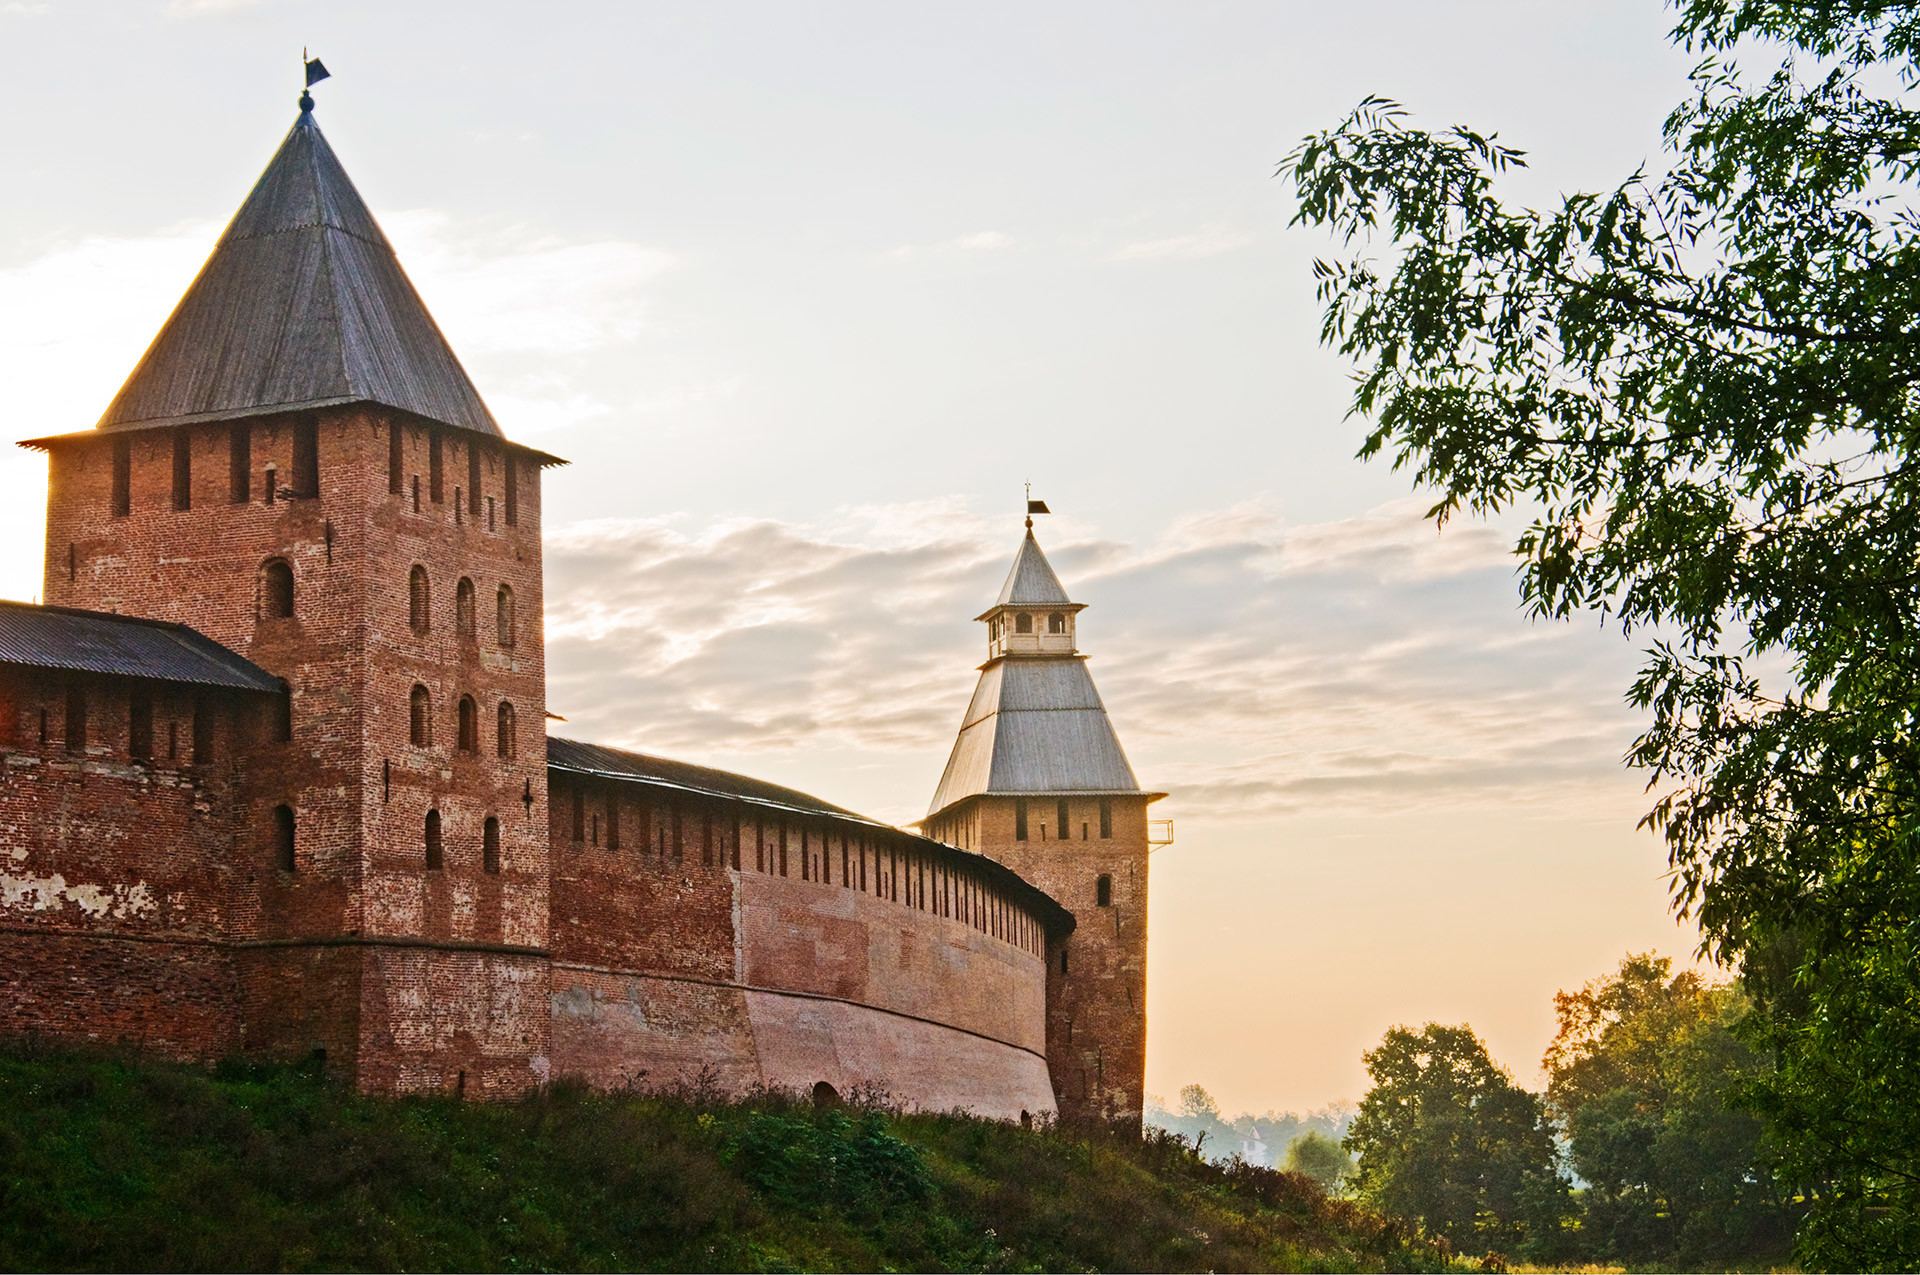 Dinding dan menara Kremlin yang dibangun kembali dengan batu bata pada abad ke-14. Veliky Novgorod, Rusia.